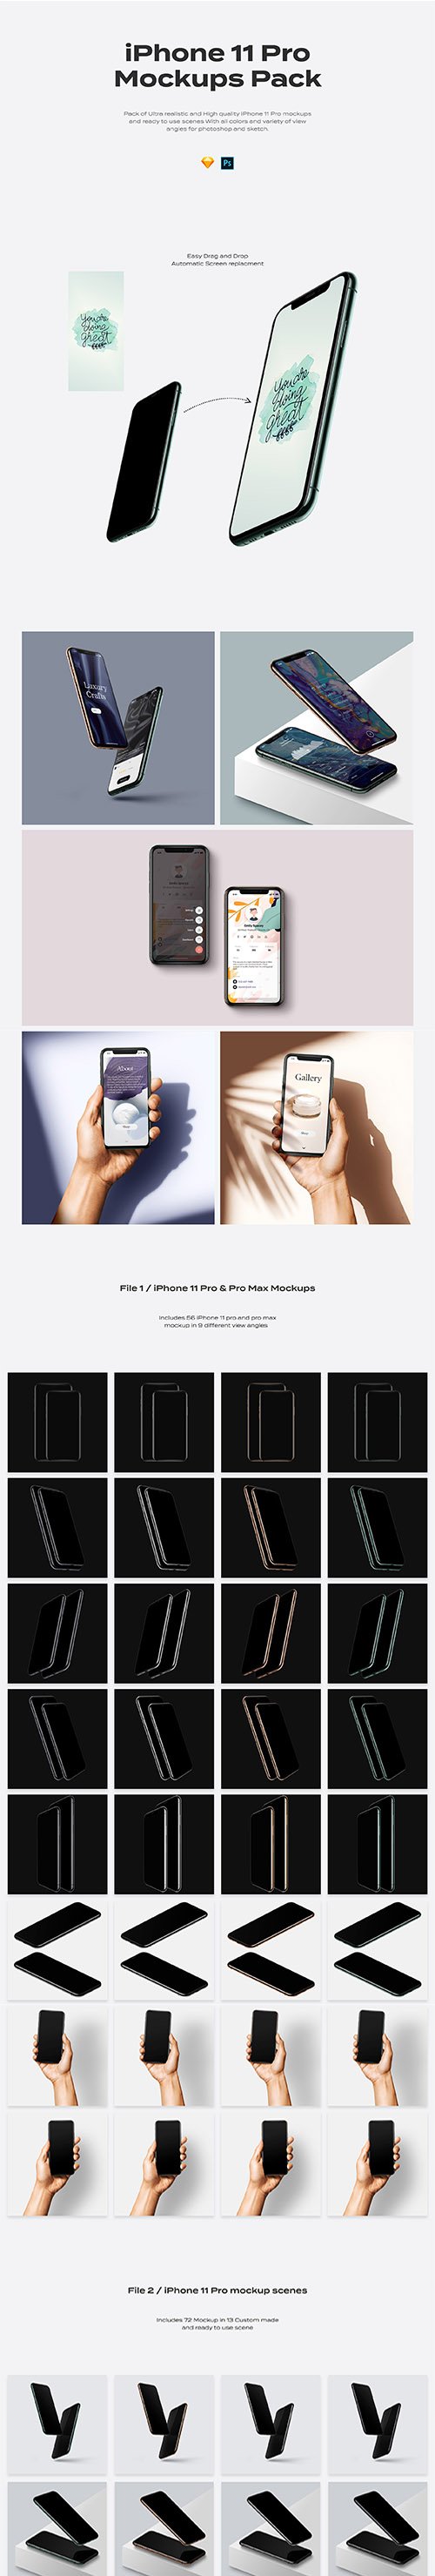 iPhone 11 pro device mockups PSD